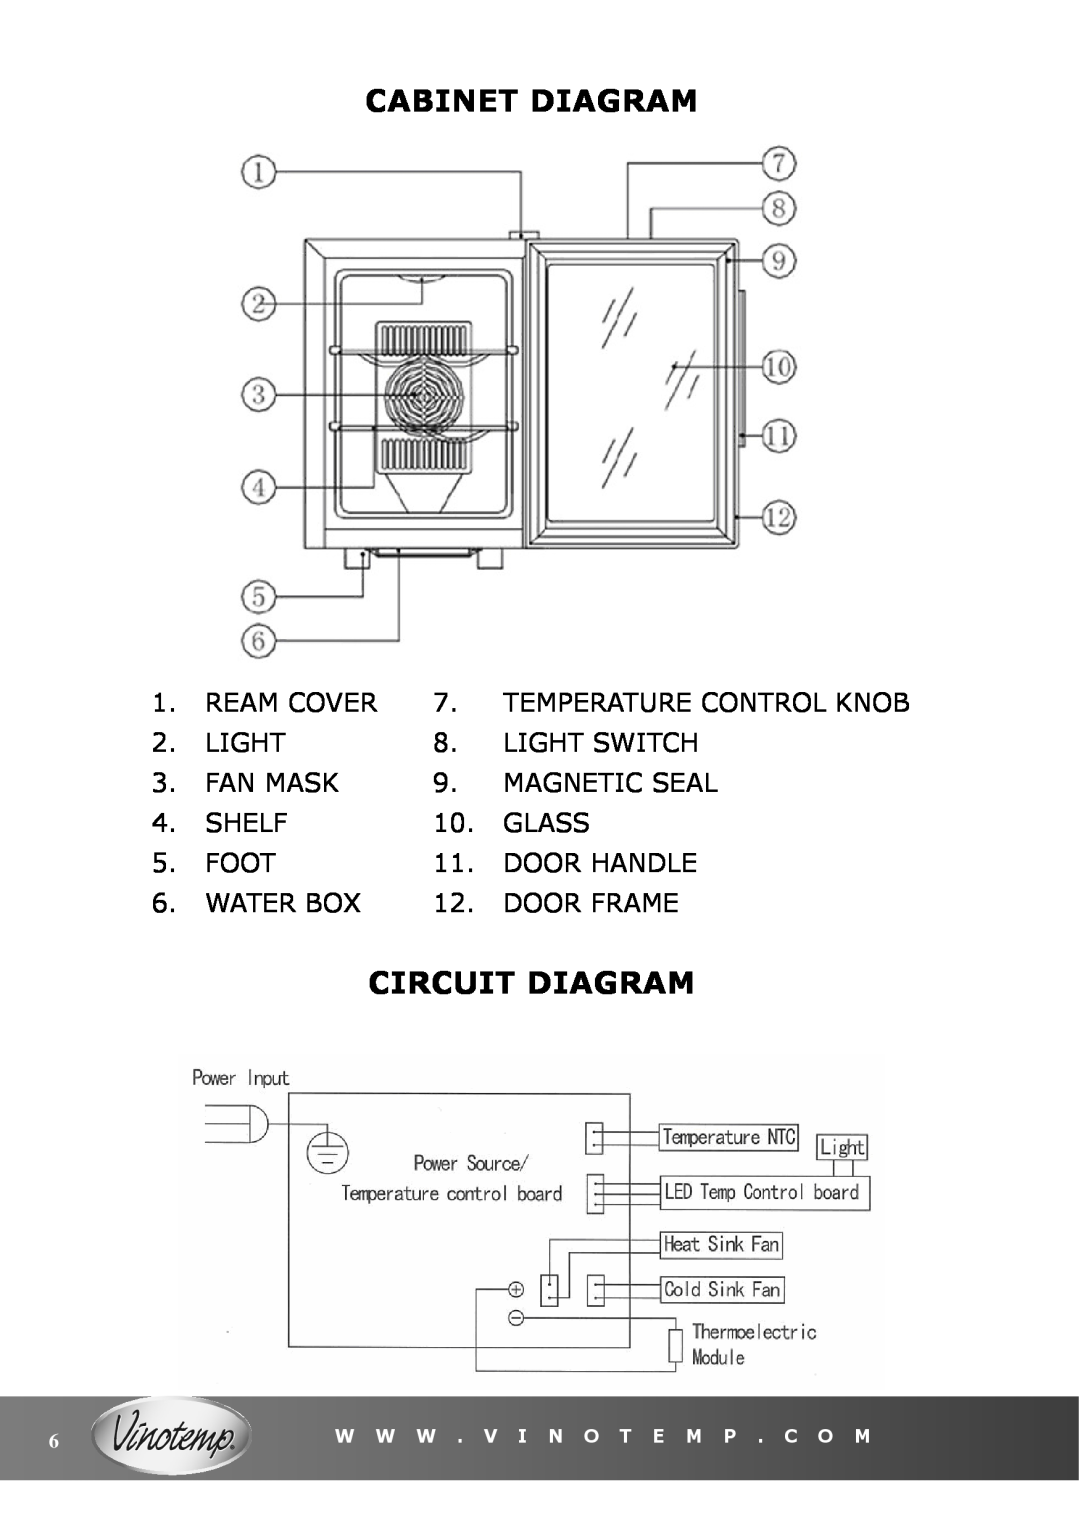 Vinotemp VT-6TEDS owner manual Cabinet Diagram, Circuit Diagram 